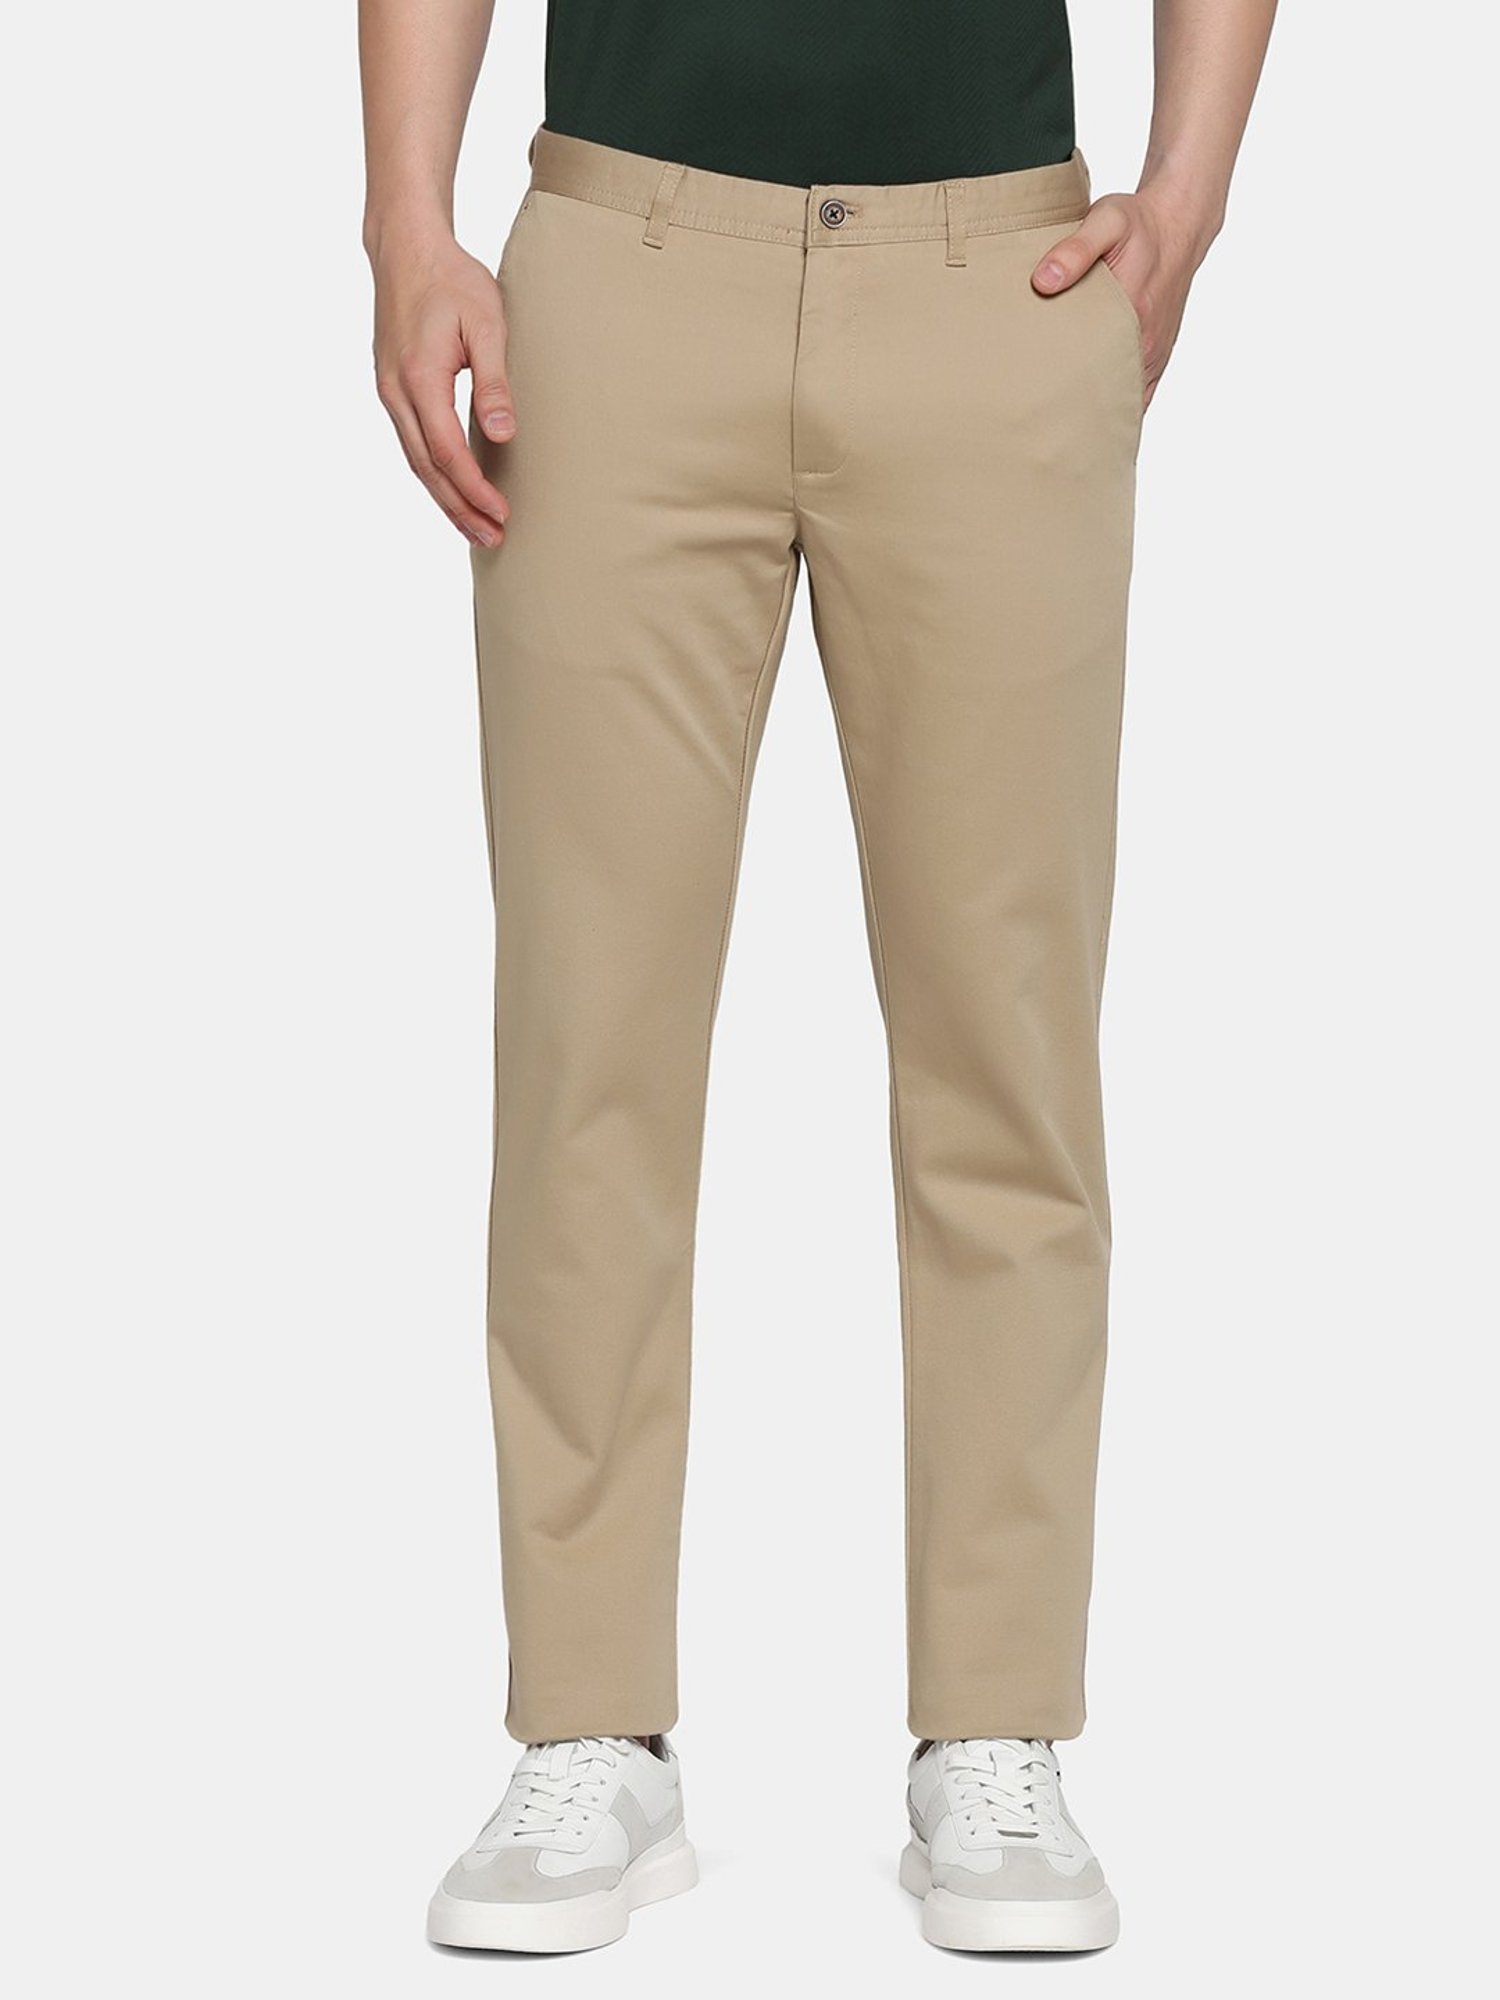 MANCREW Formal Pants for men  Formal Trousers Combo  Beige Khaki